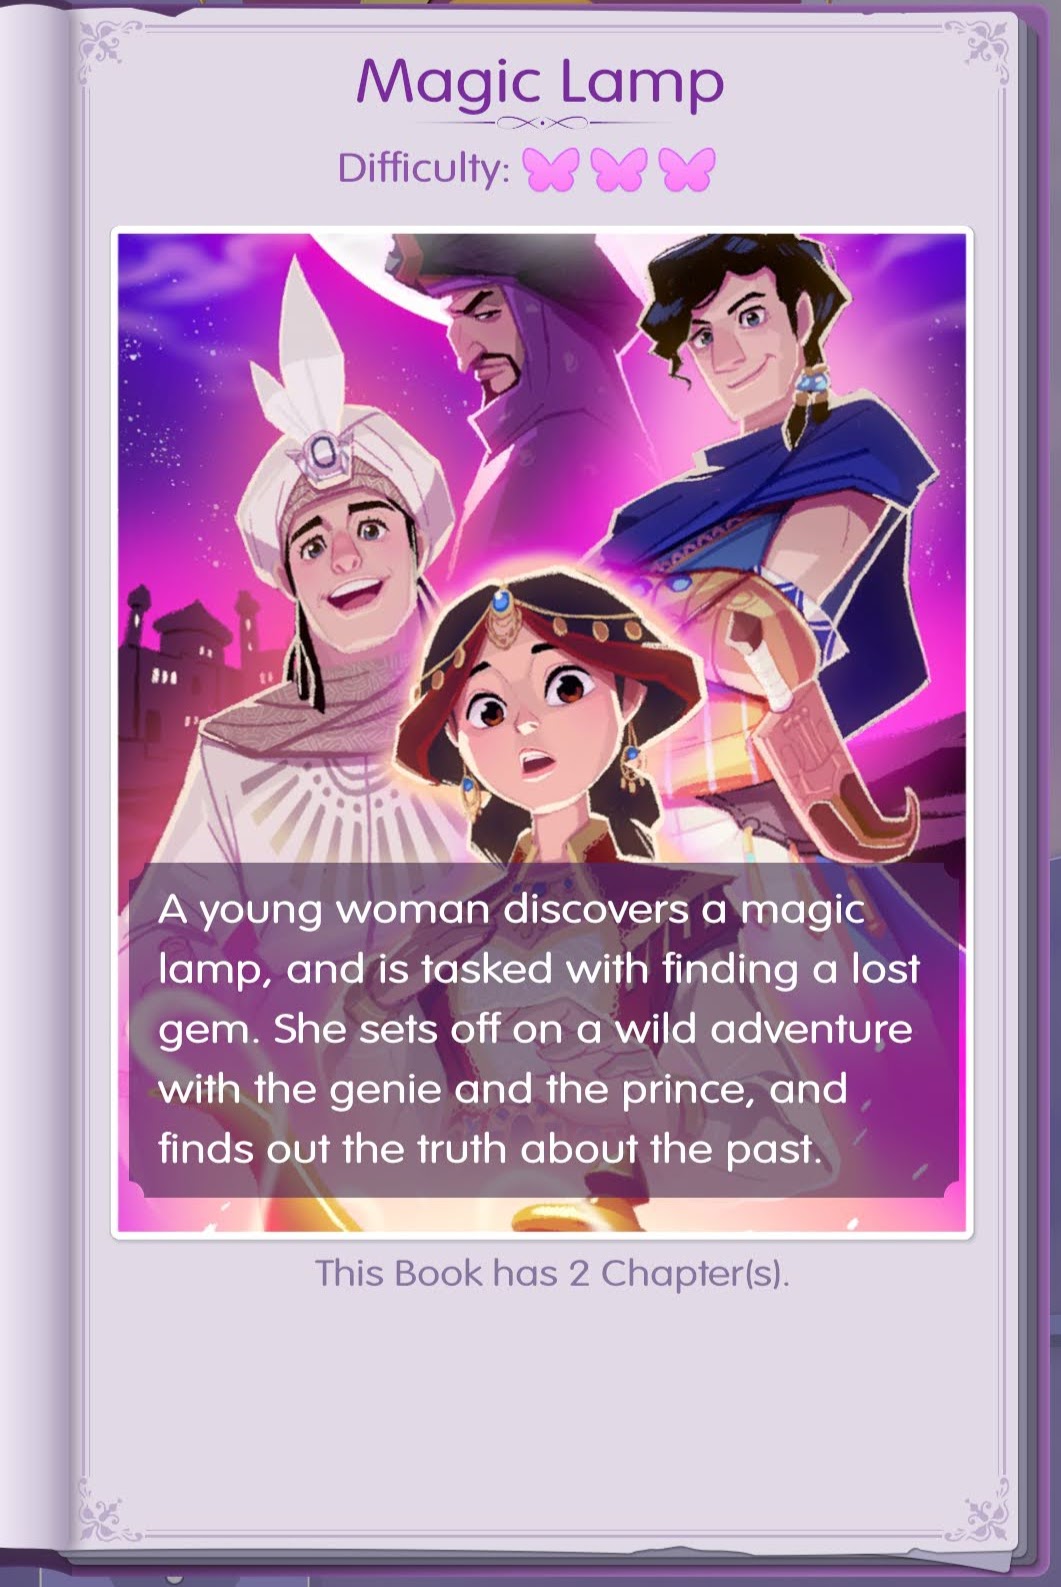 Artist Gender-Bends Disney Princesses Into Princes - Inside the Magic